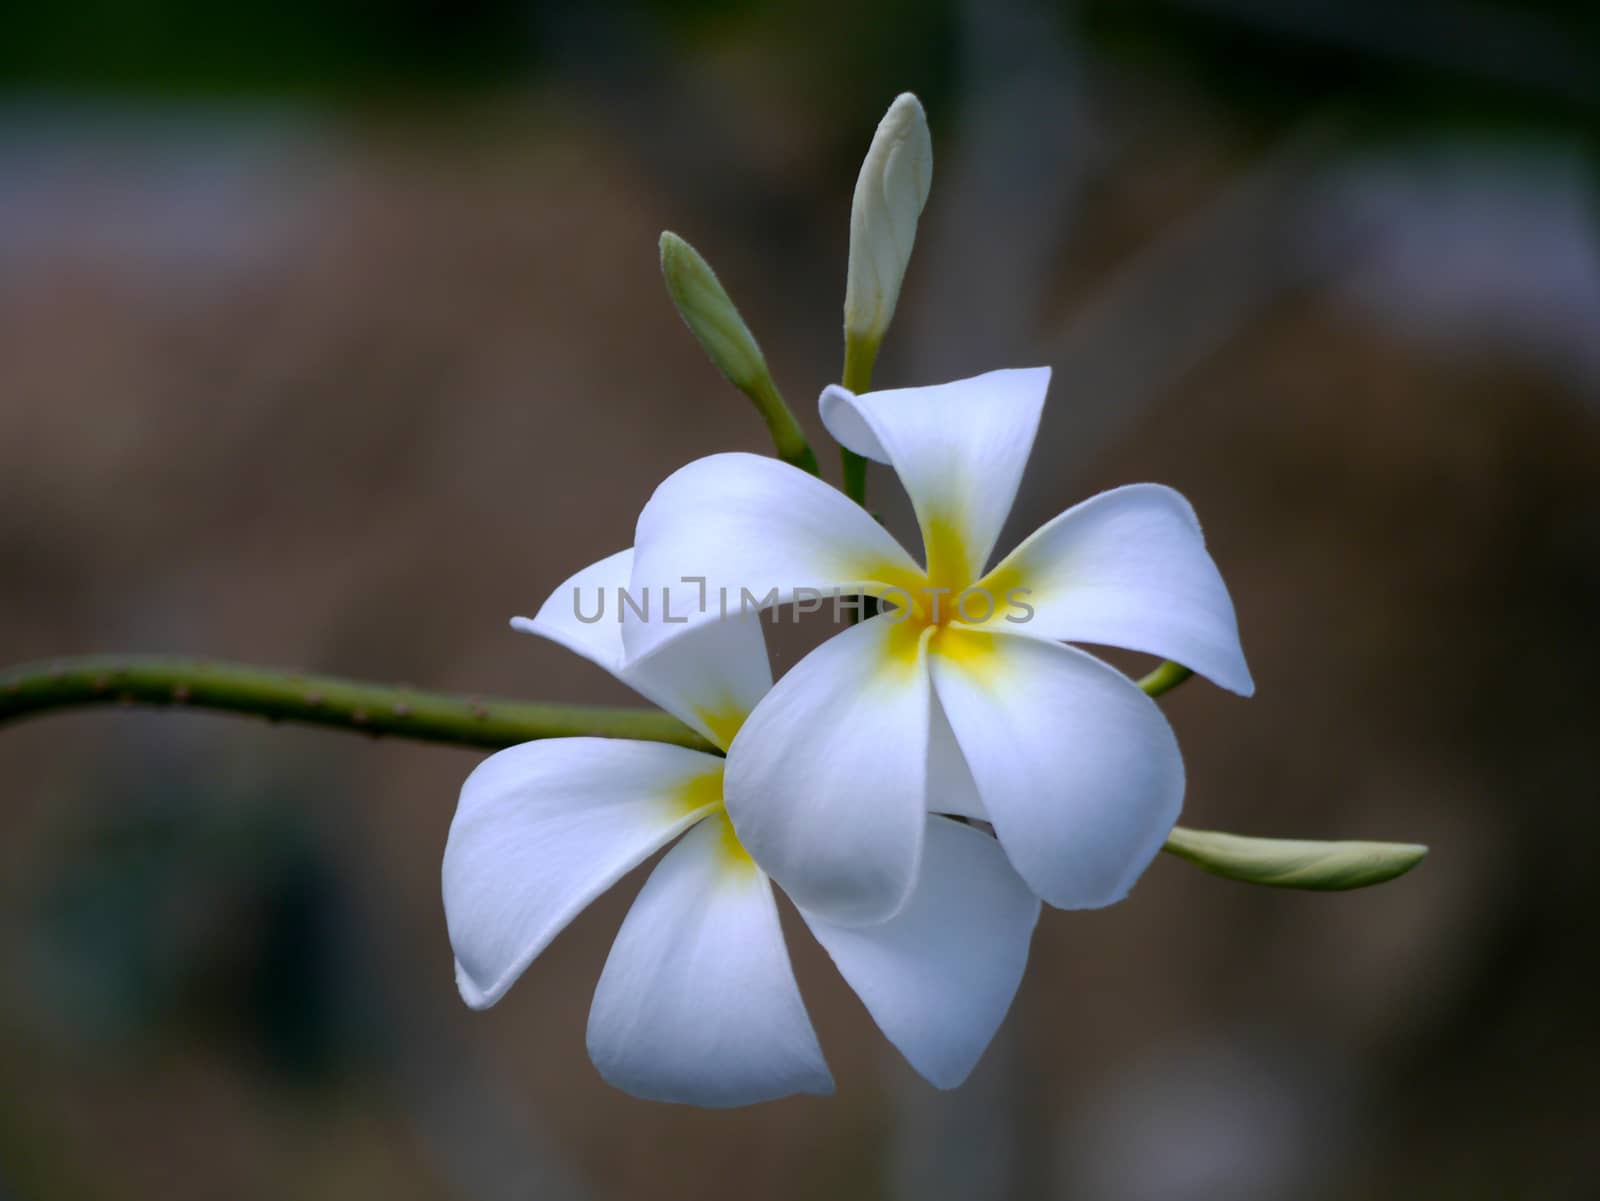 White Frangipani flowers. by Noppharat_th